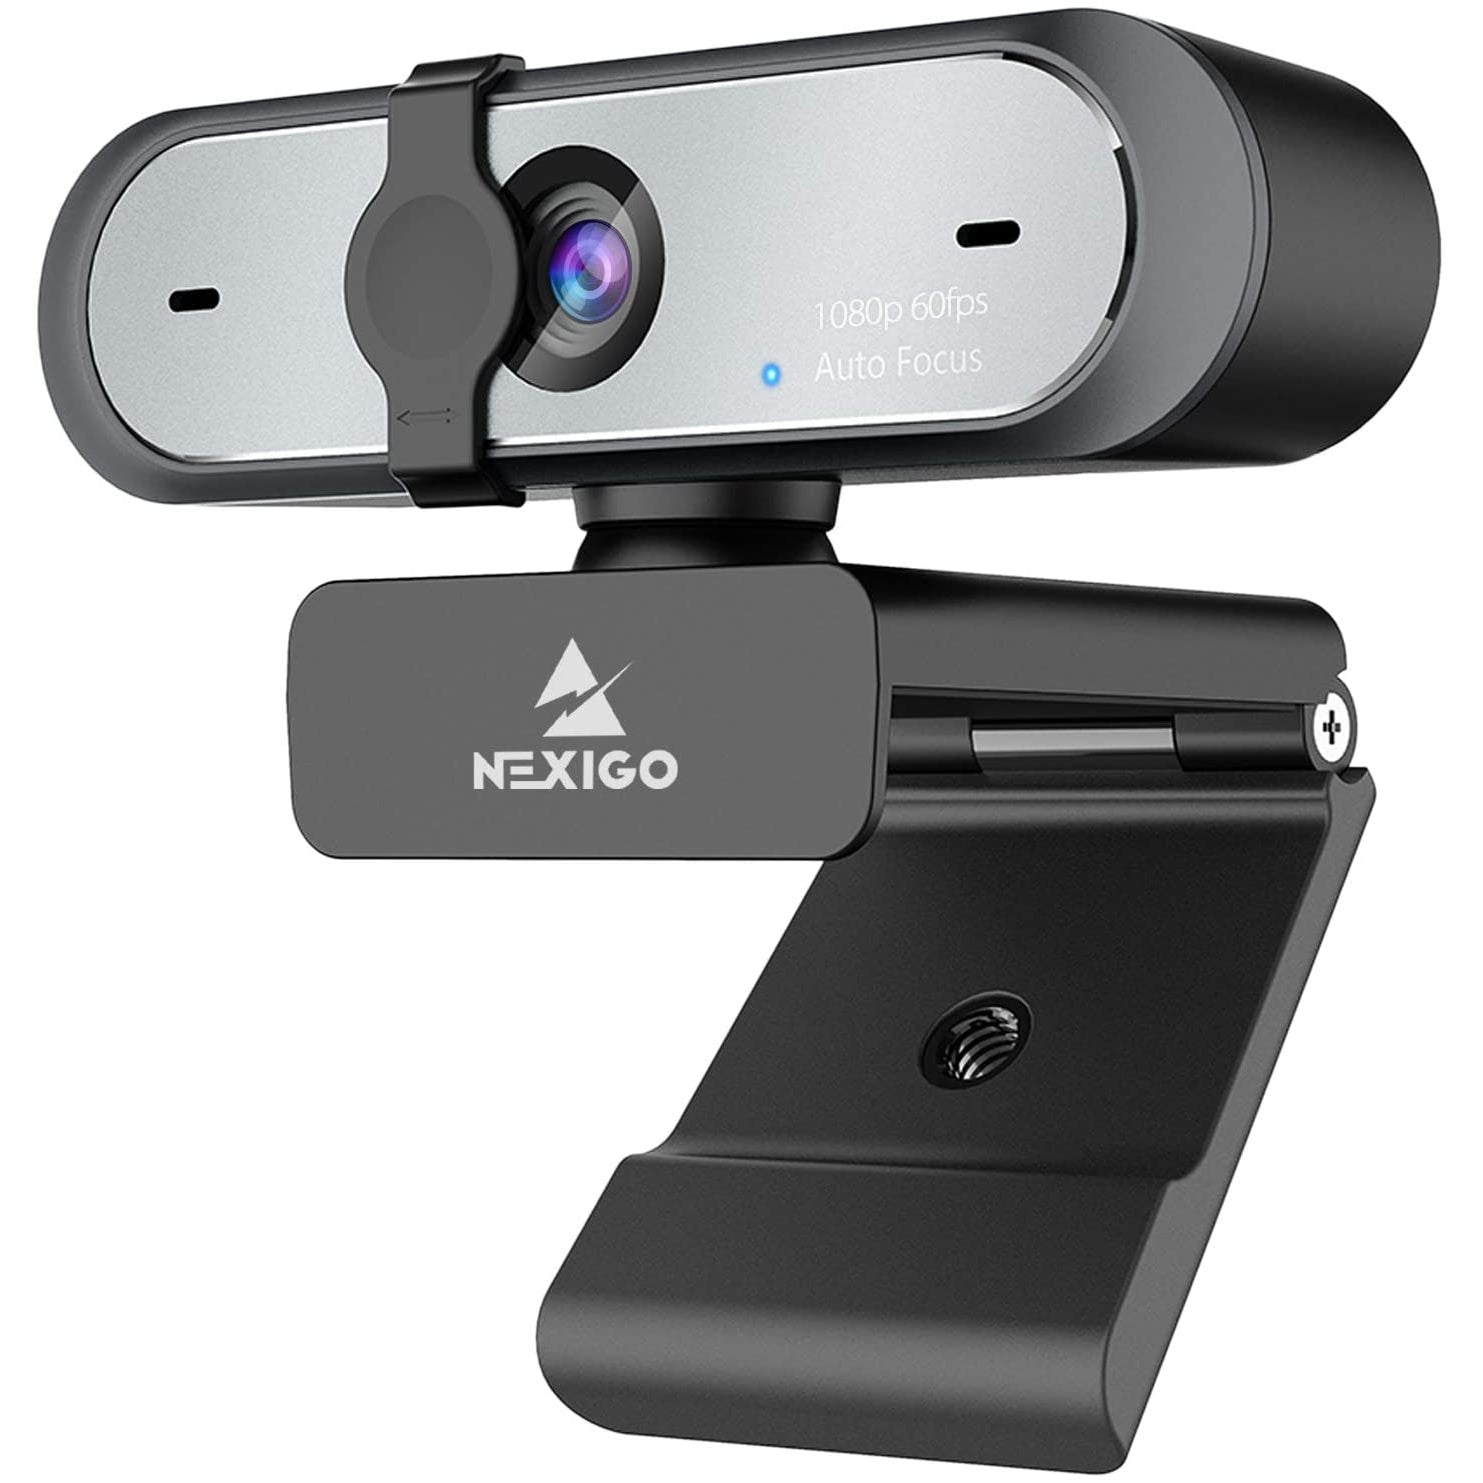 The black autofocus 1080p 60fps webcam with shutter and flexible clip